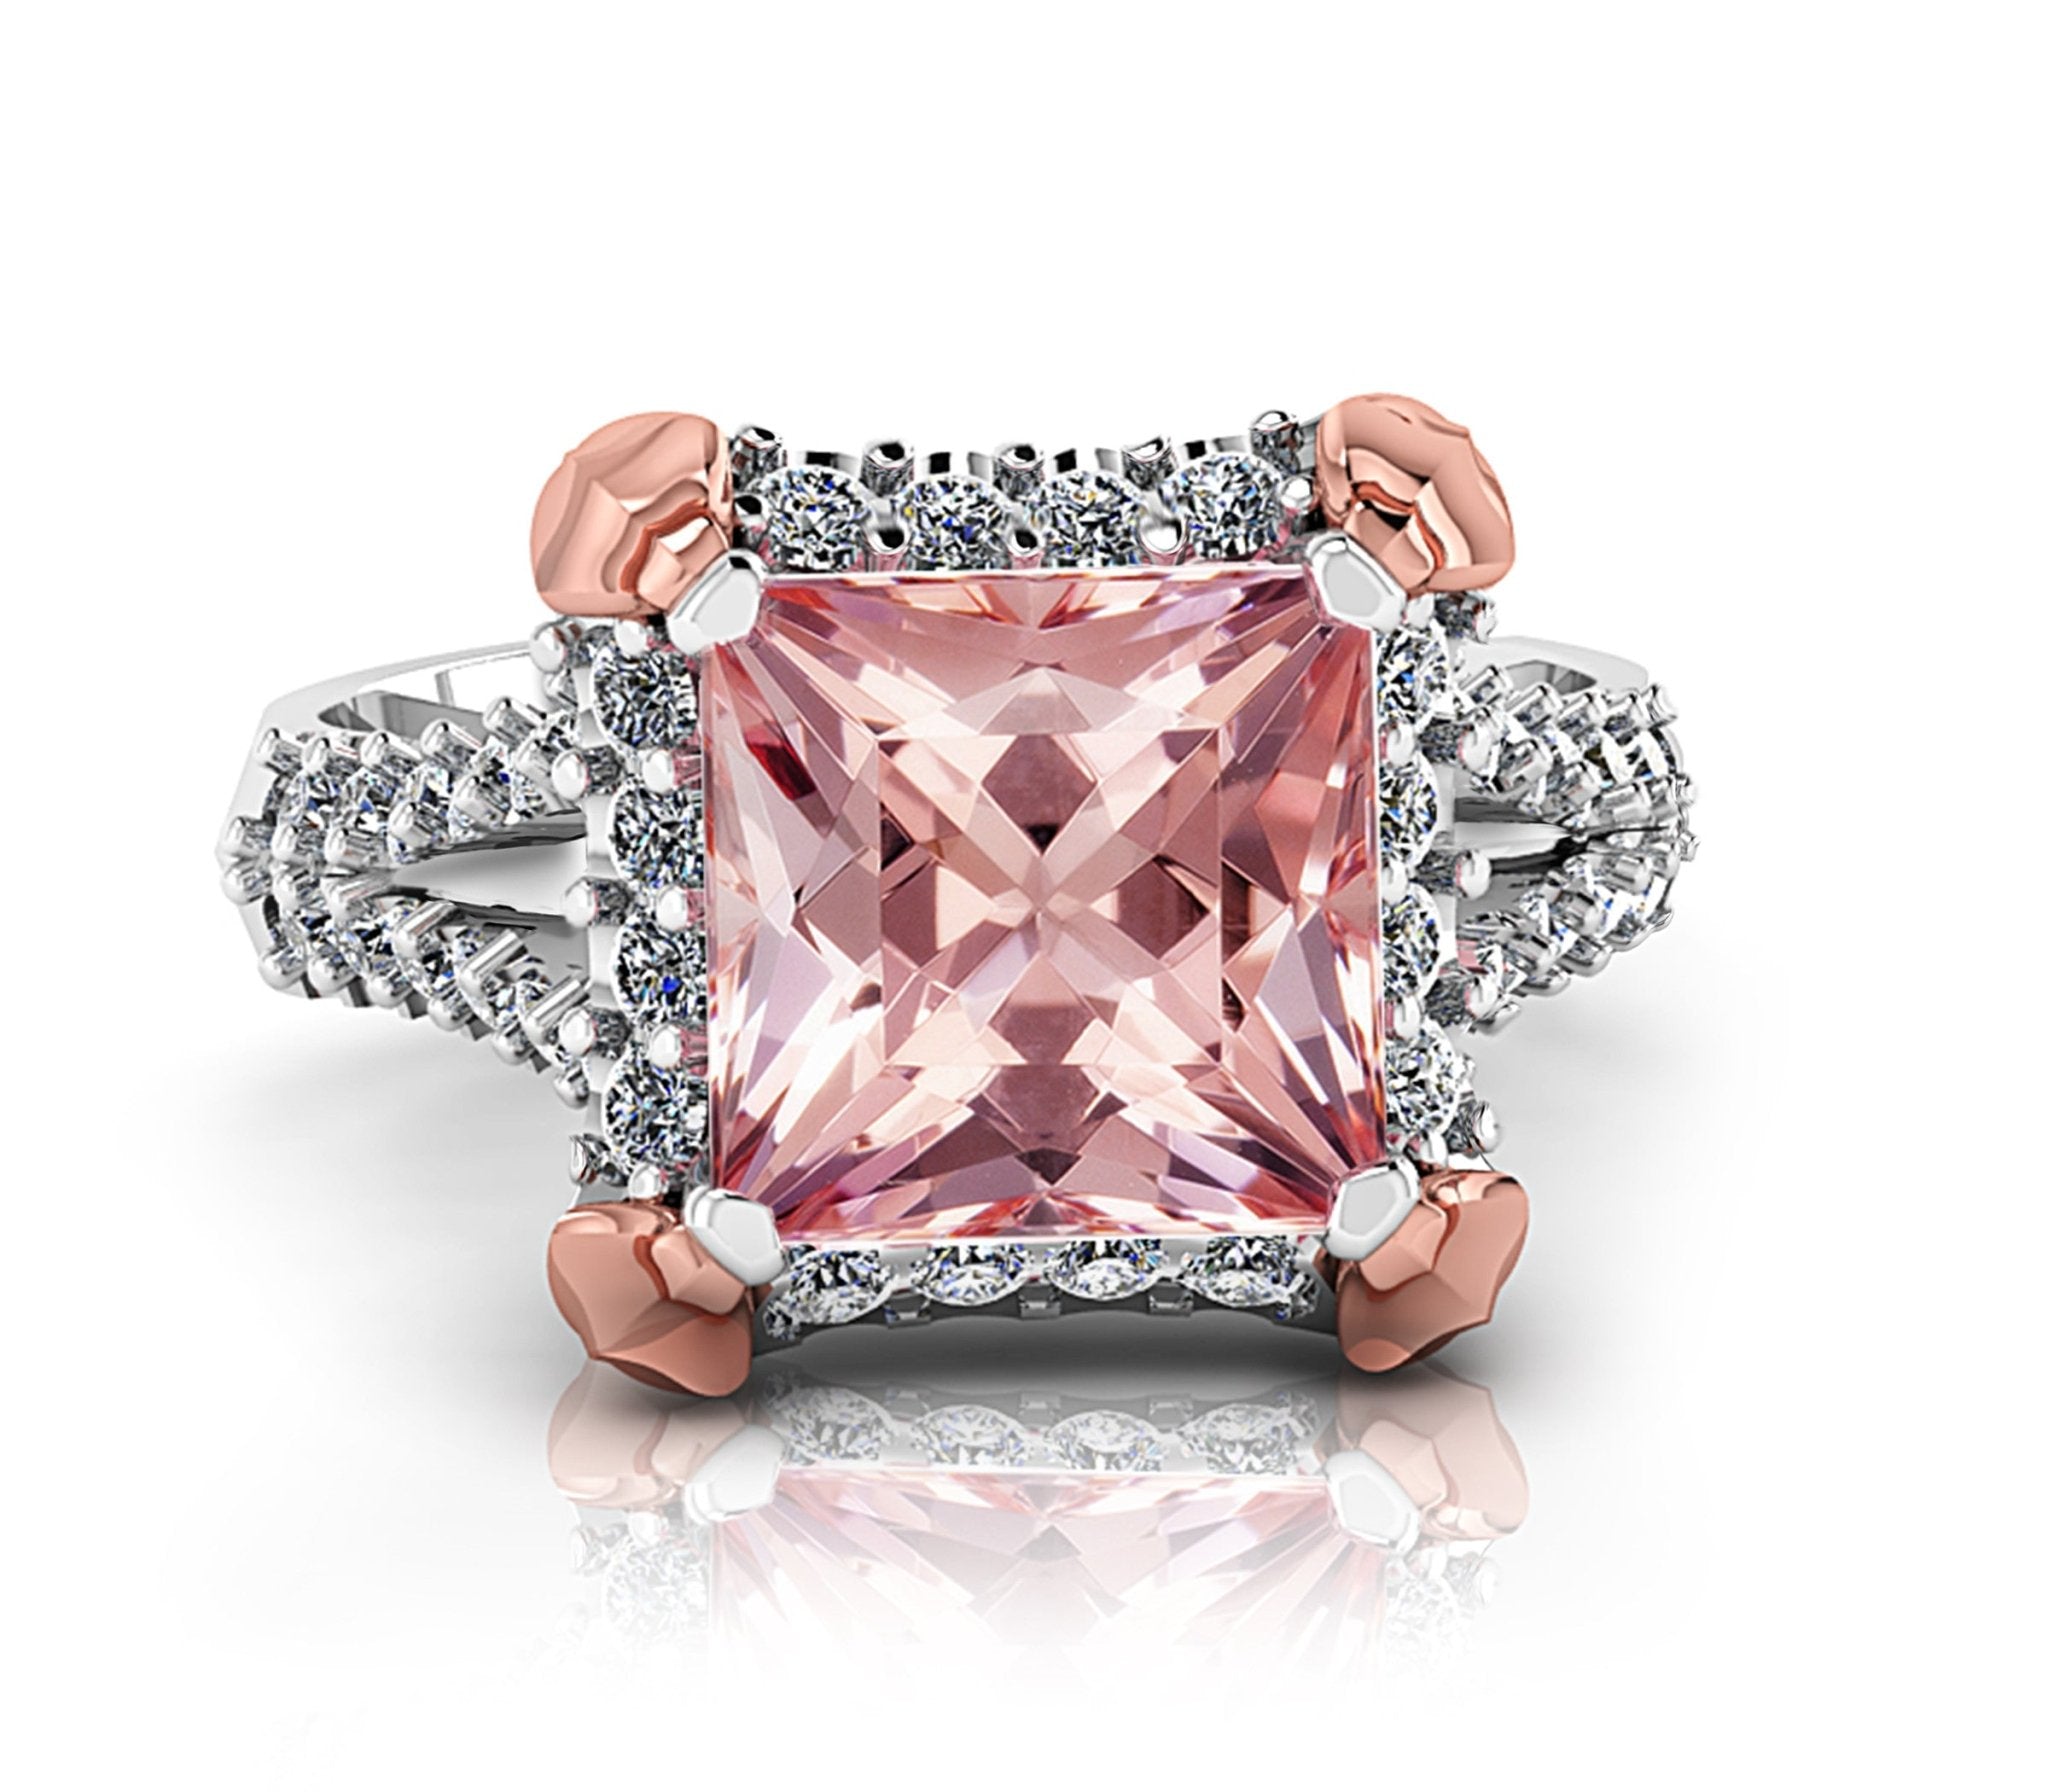 Cushion cut pink tourmaline and diamonds Ring - ForeverJewels Design Studio 8